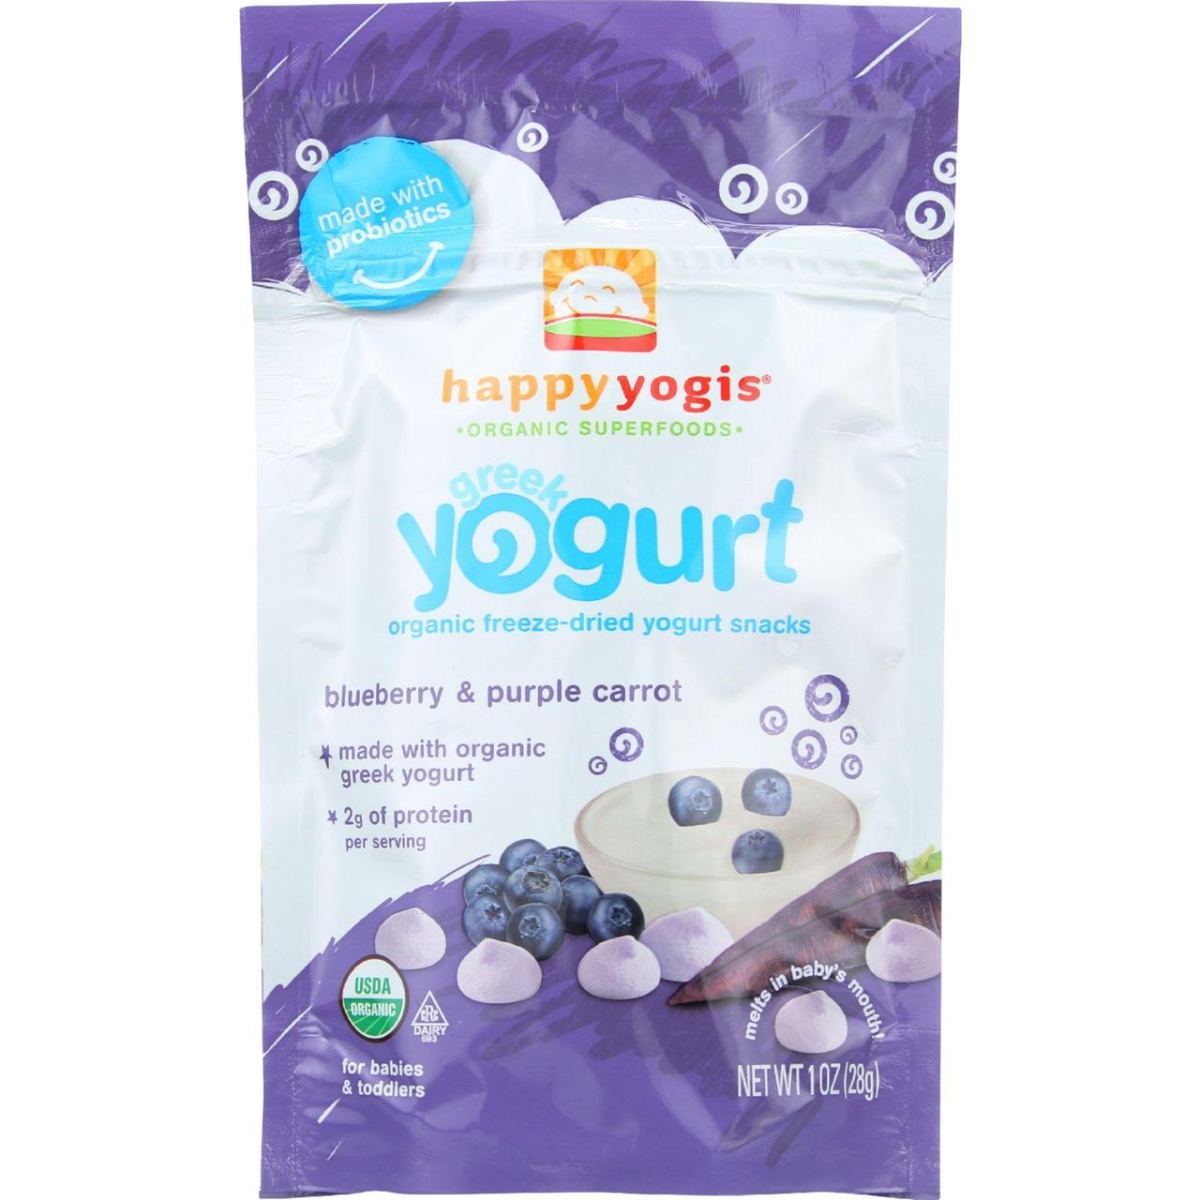 Hg1624782 1 Oz Blueberry & Purple Carrot Organic Freeze-dried Greek Yogurt Snacks For Babies & Toddlers, Case Of 8